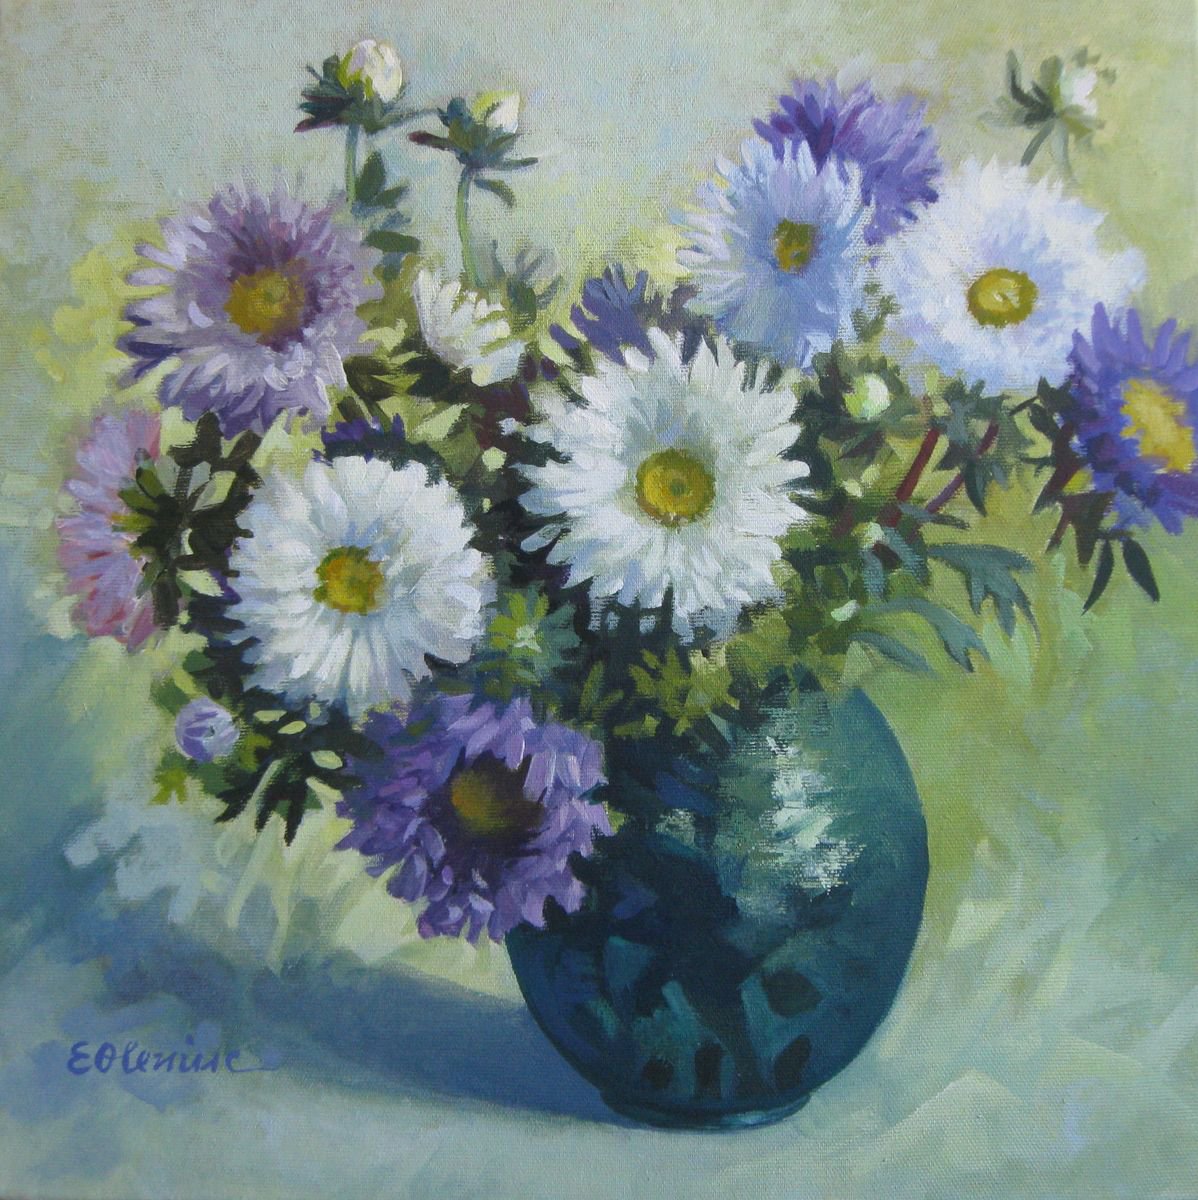 Summer flowers by Elena Oleniuc